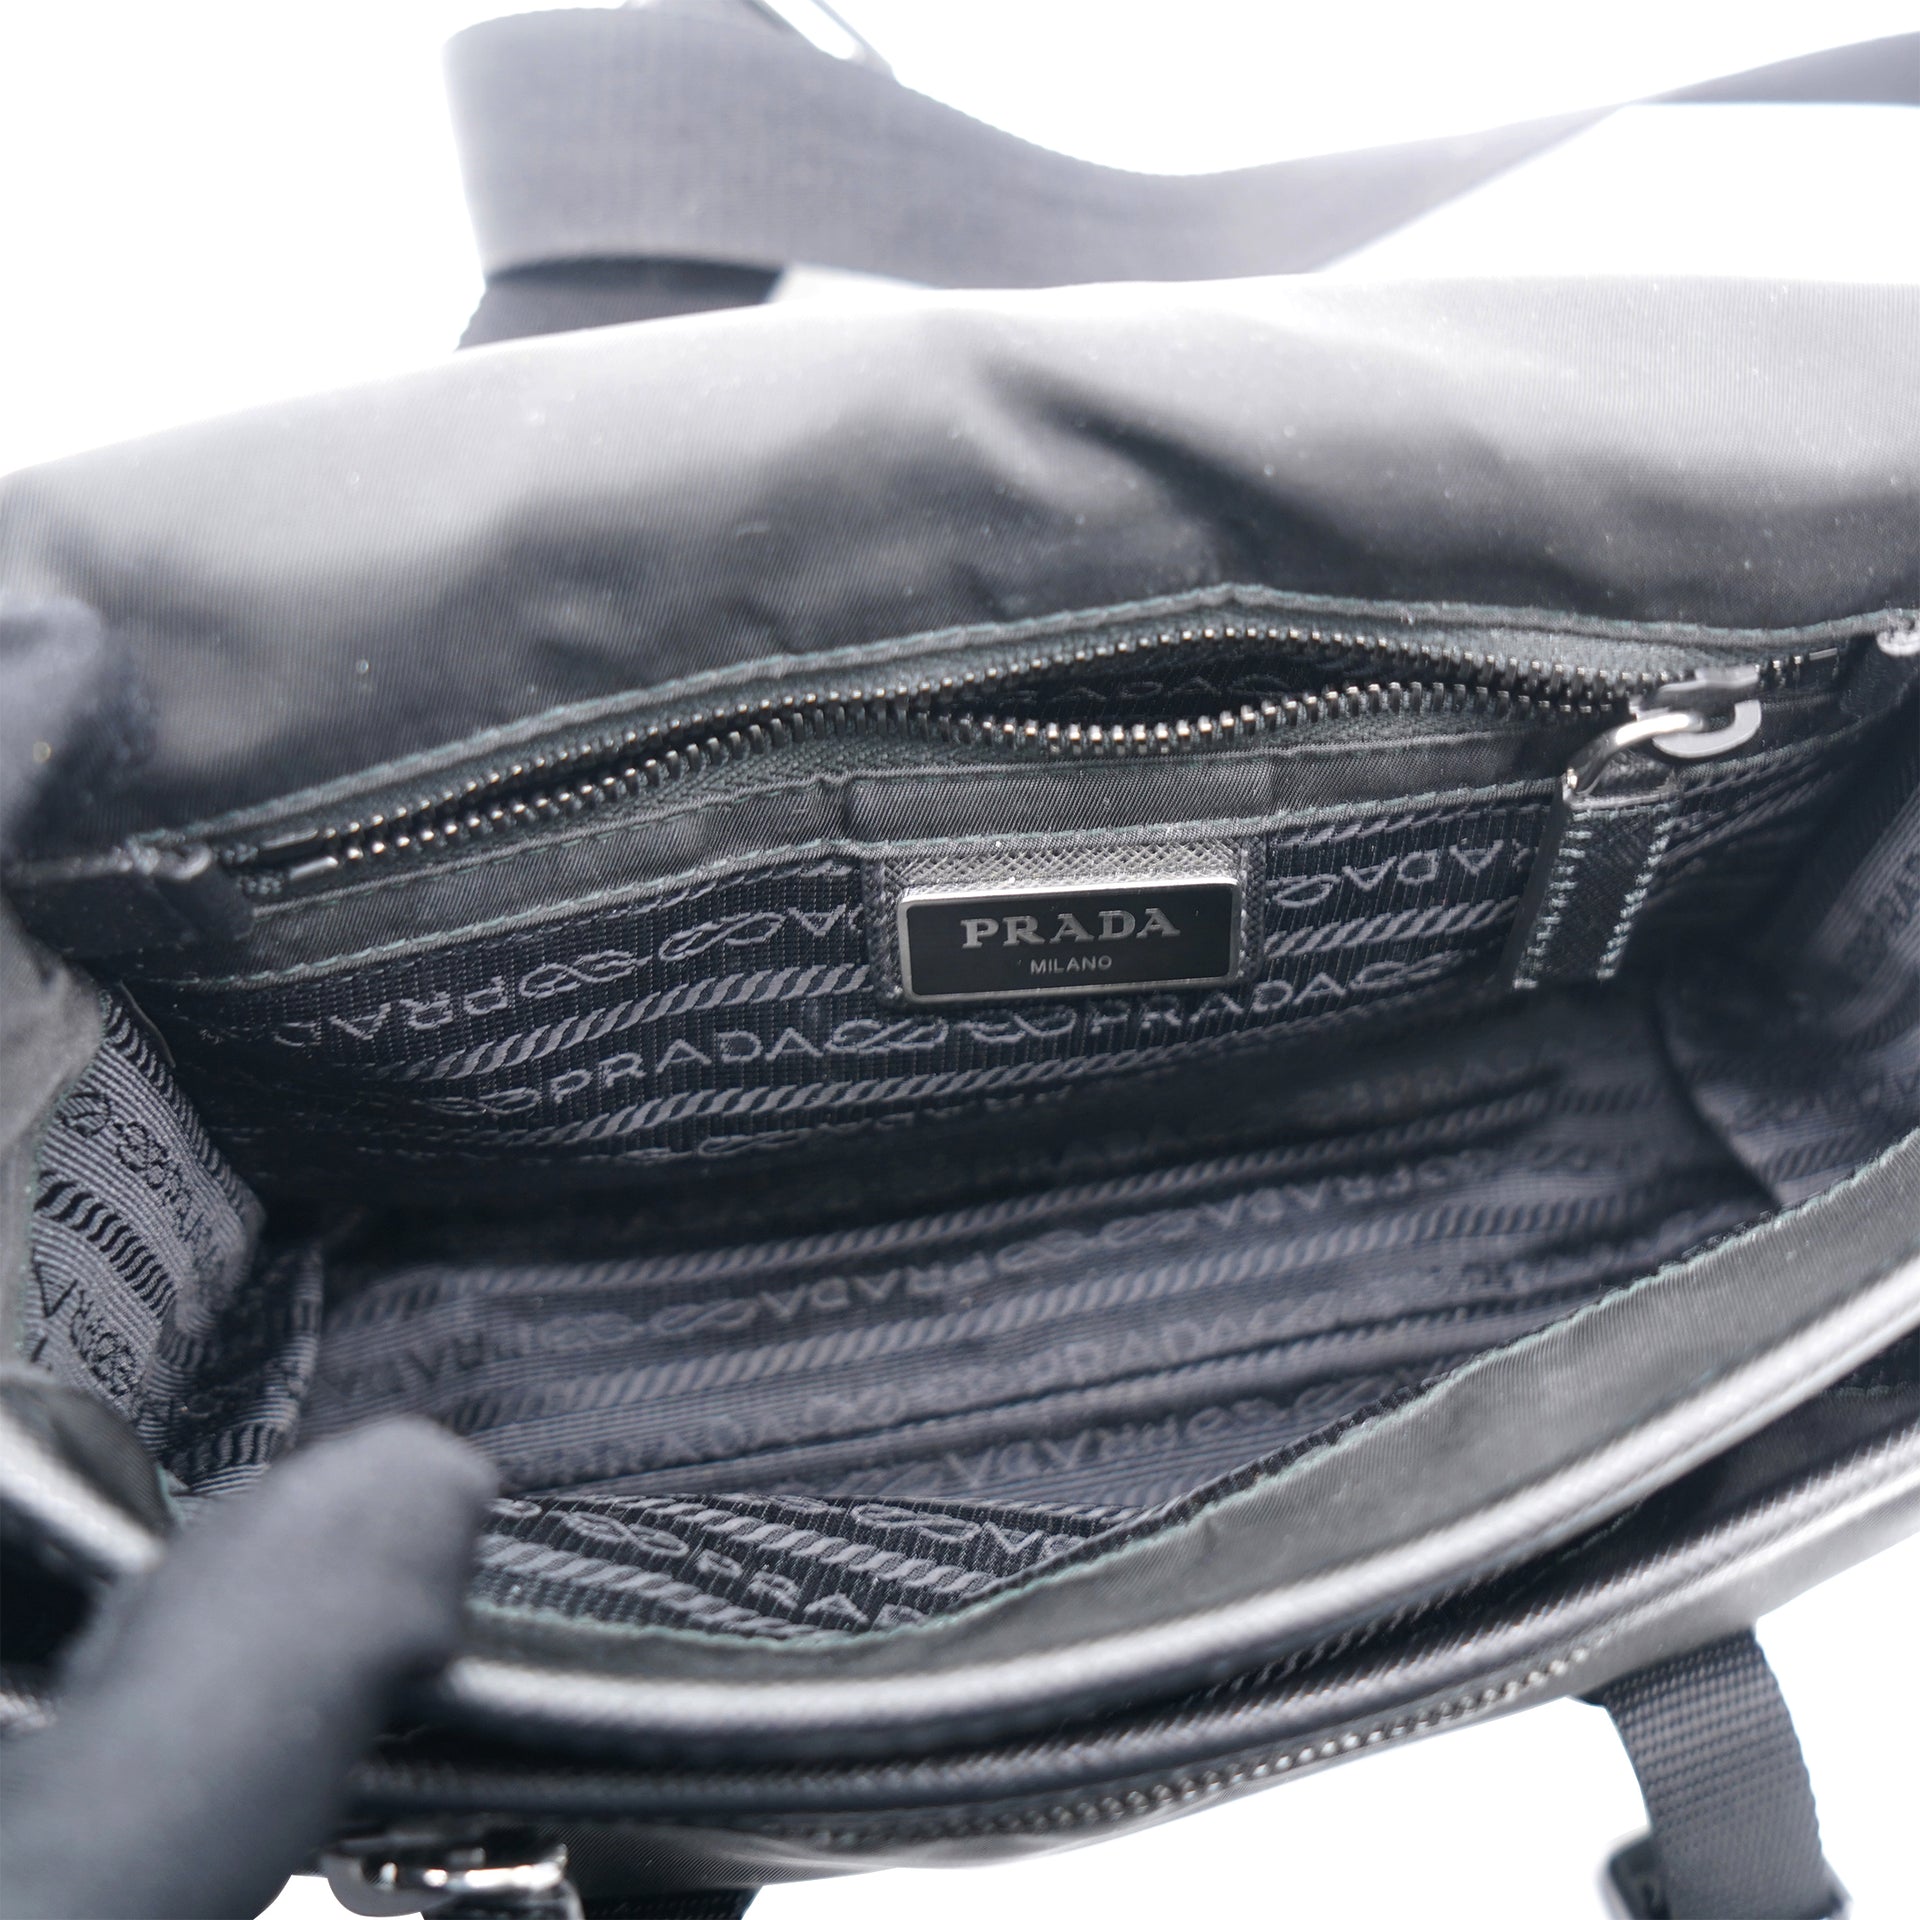 Re-Nylon and Saffiano Leather Shoulder Bag – STYLISHTOP